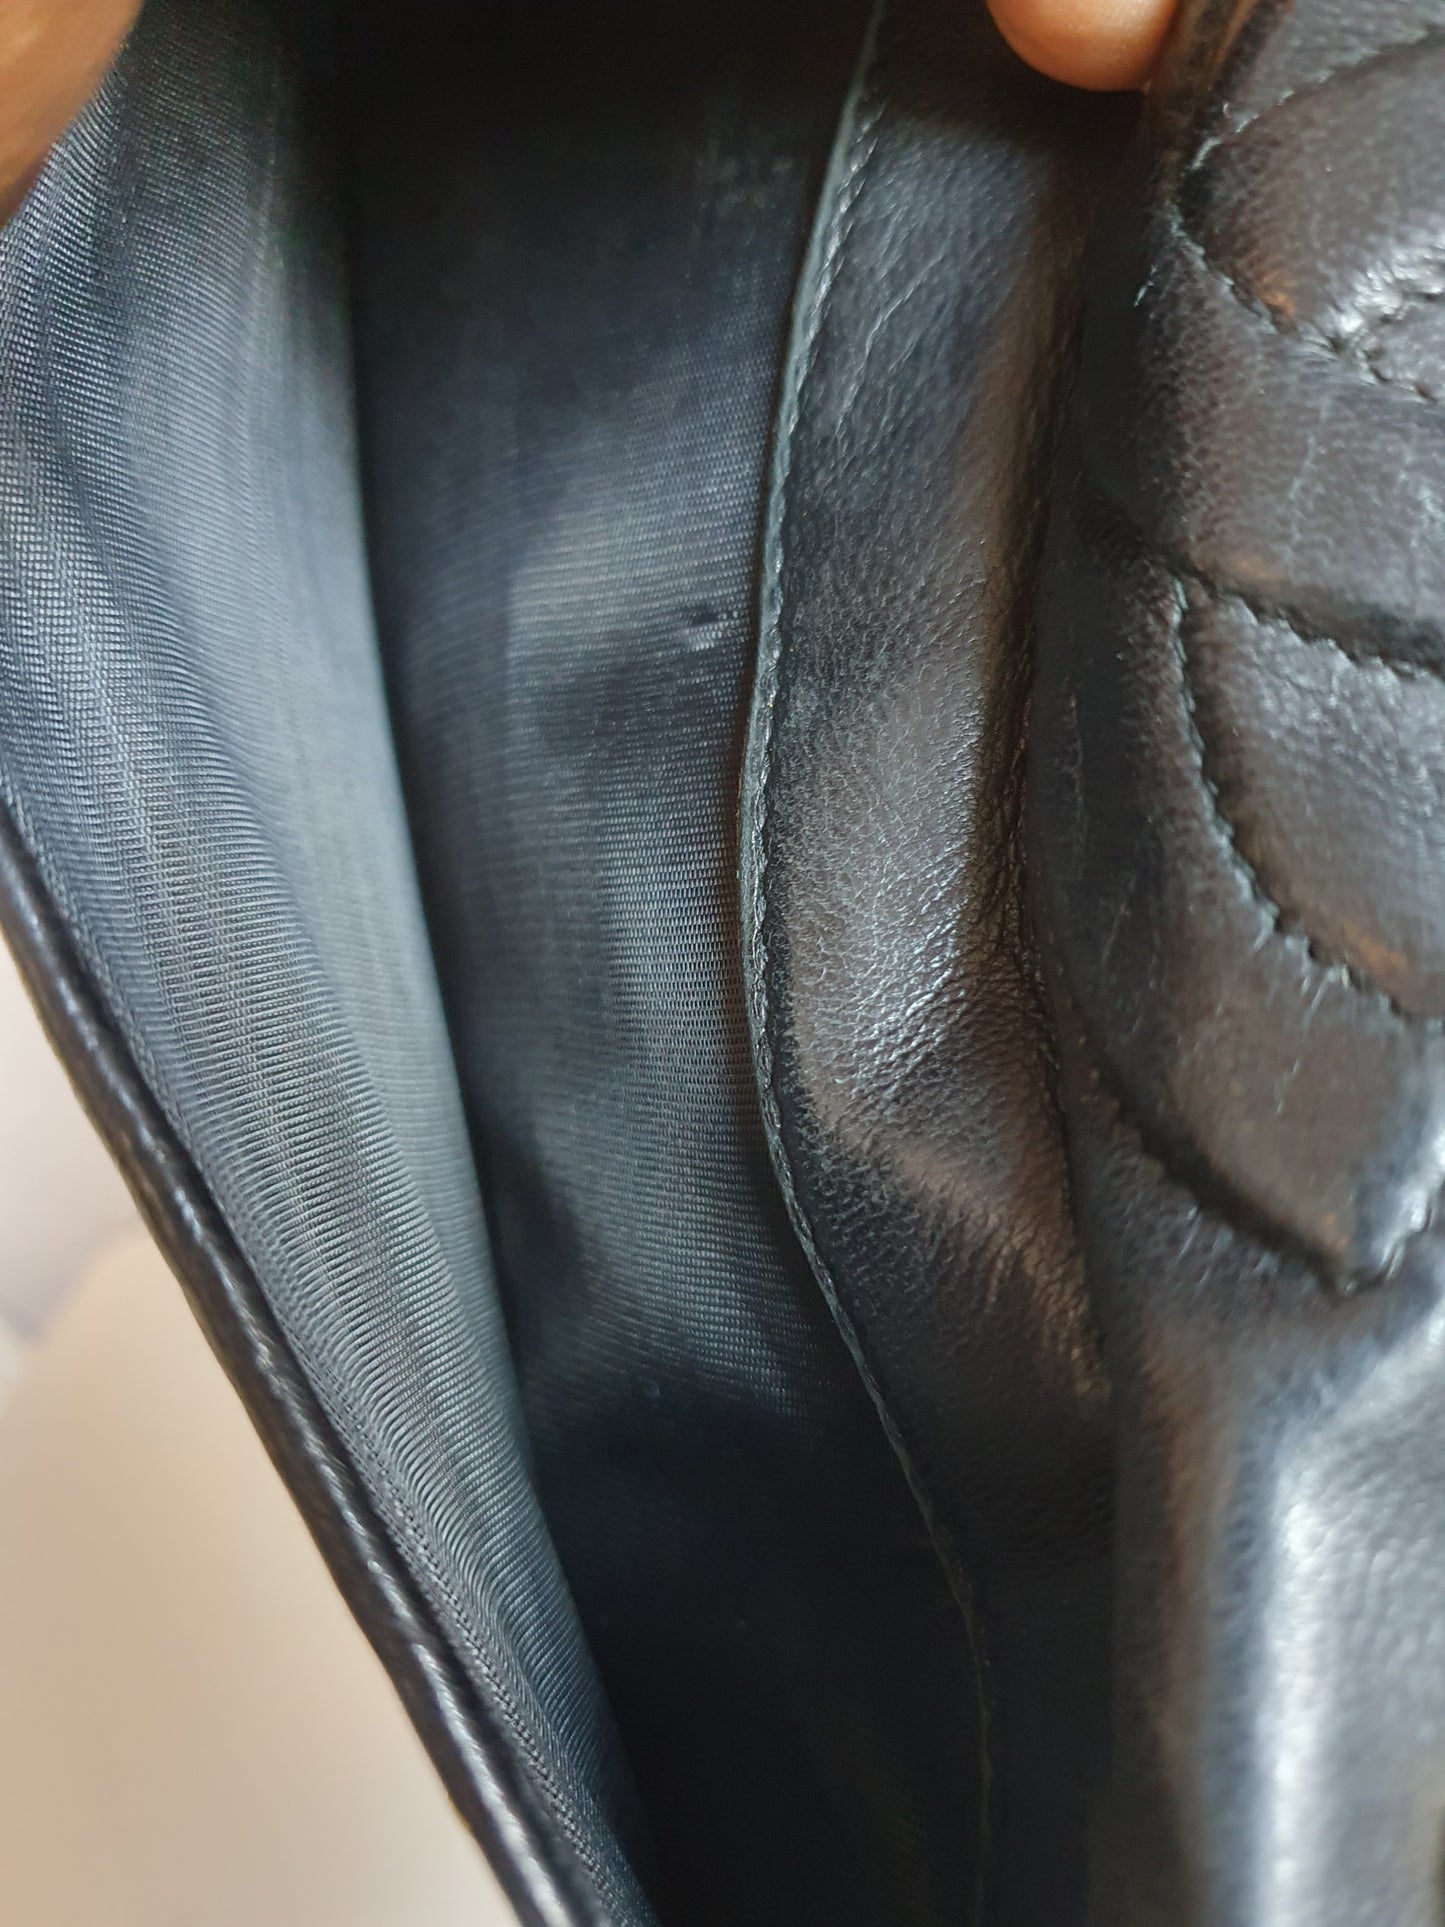 CHANEL  leather crossbody bag